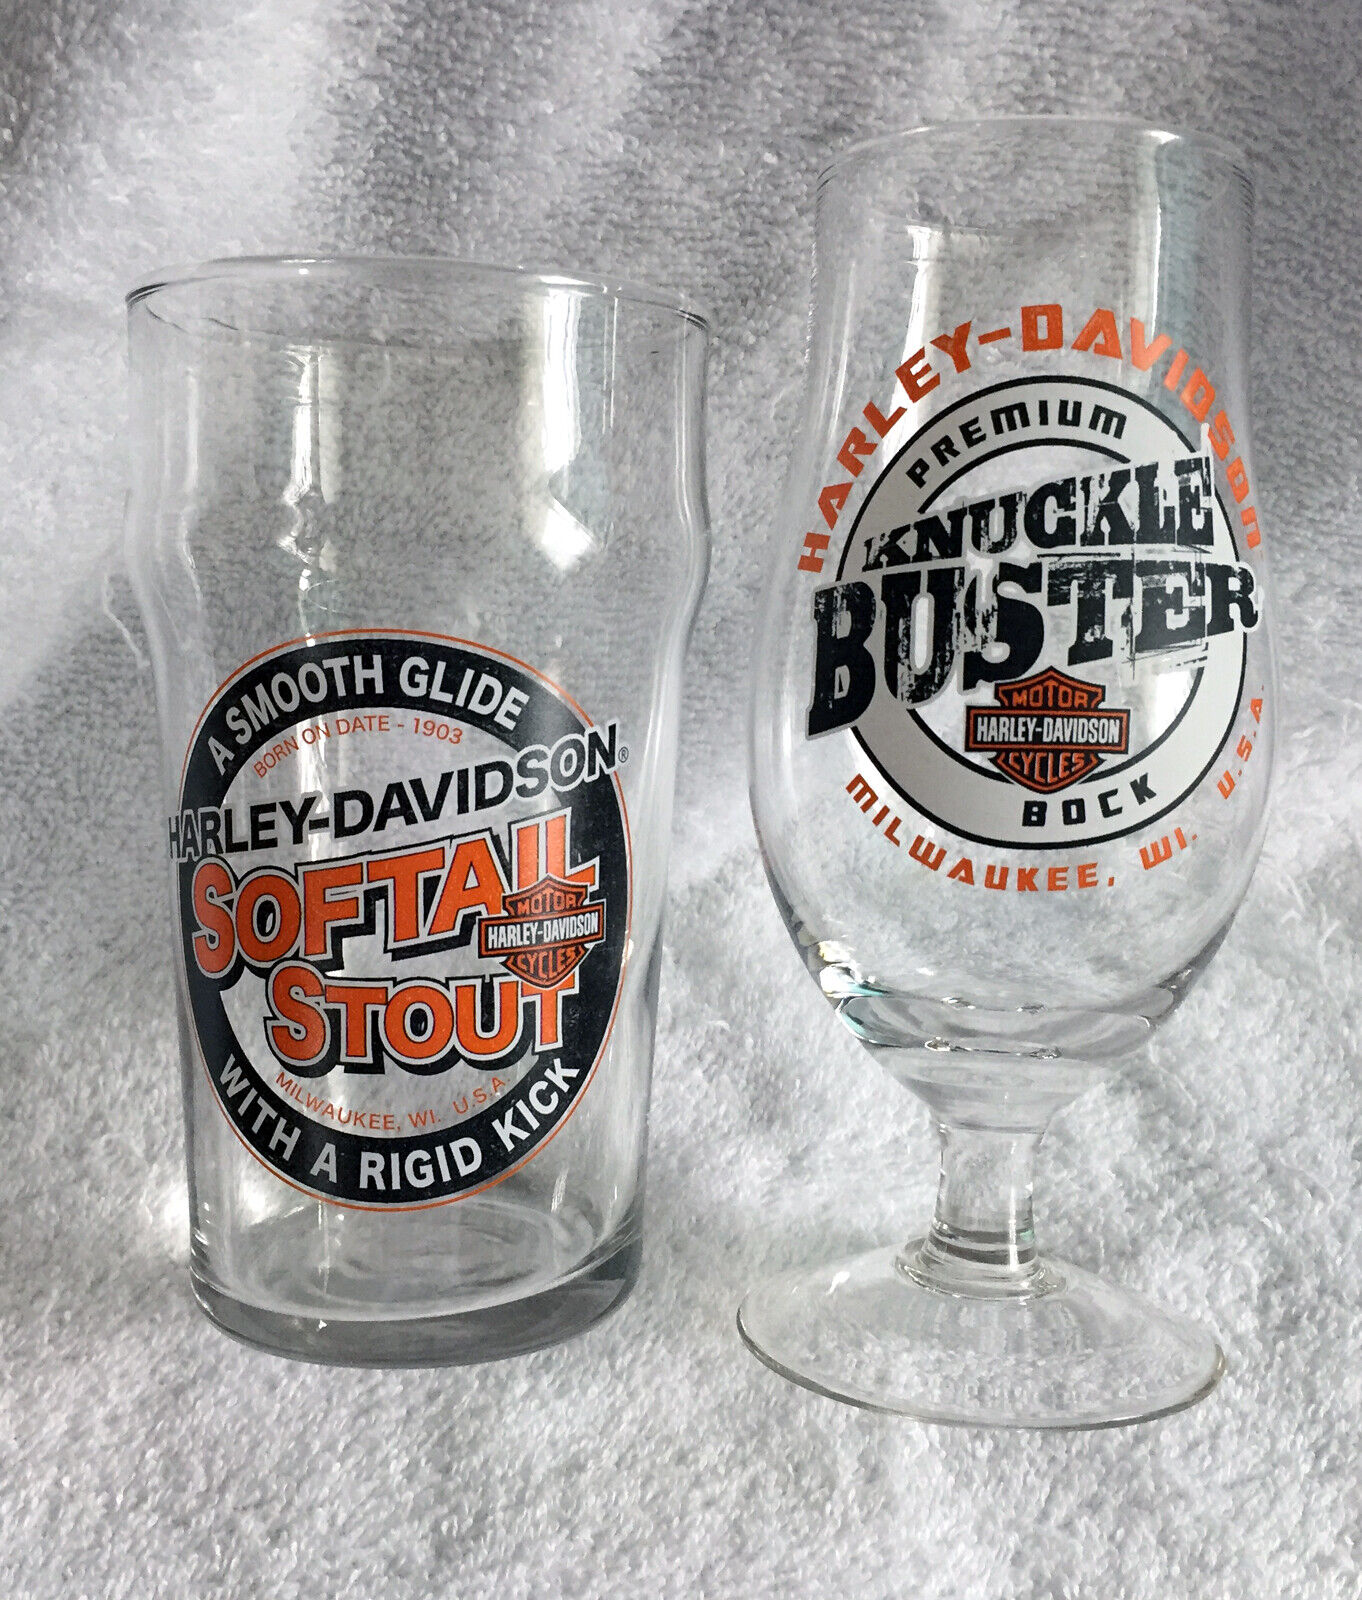 2 Harley Davidson Softail Stout Glass & Knuckle Buster Bock St...